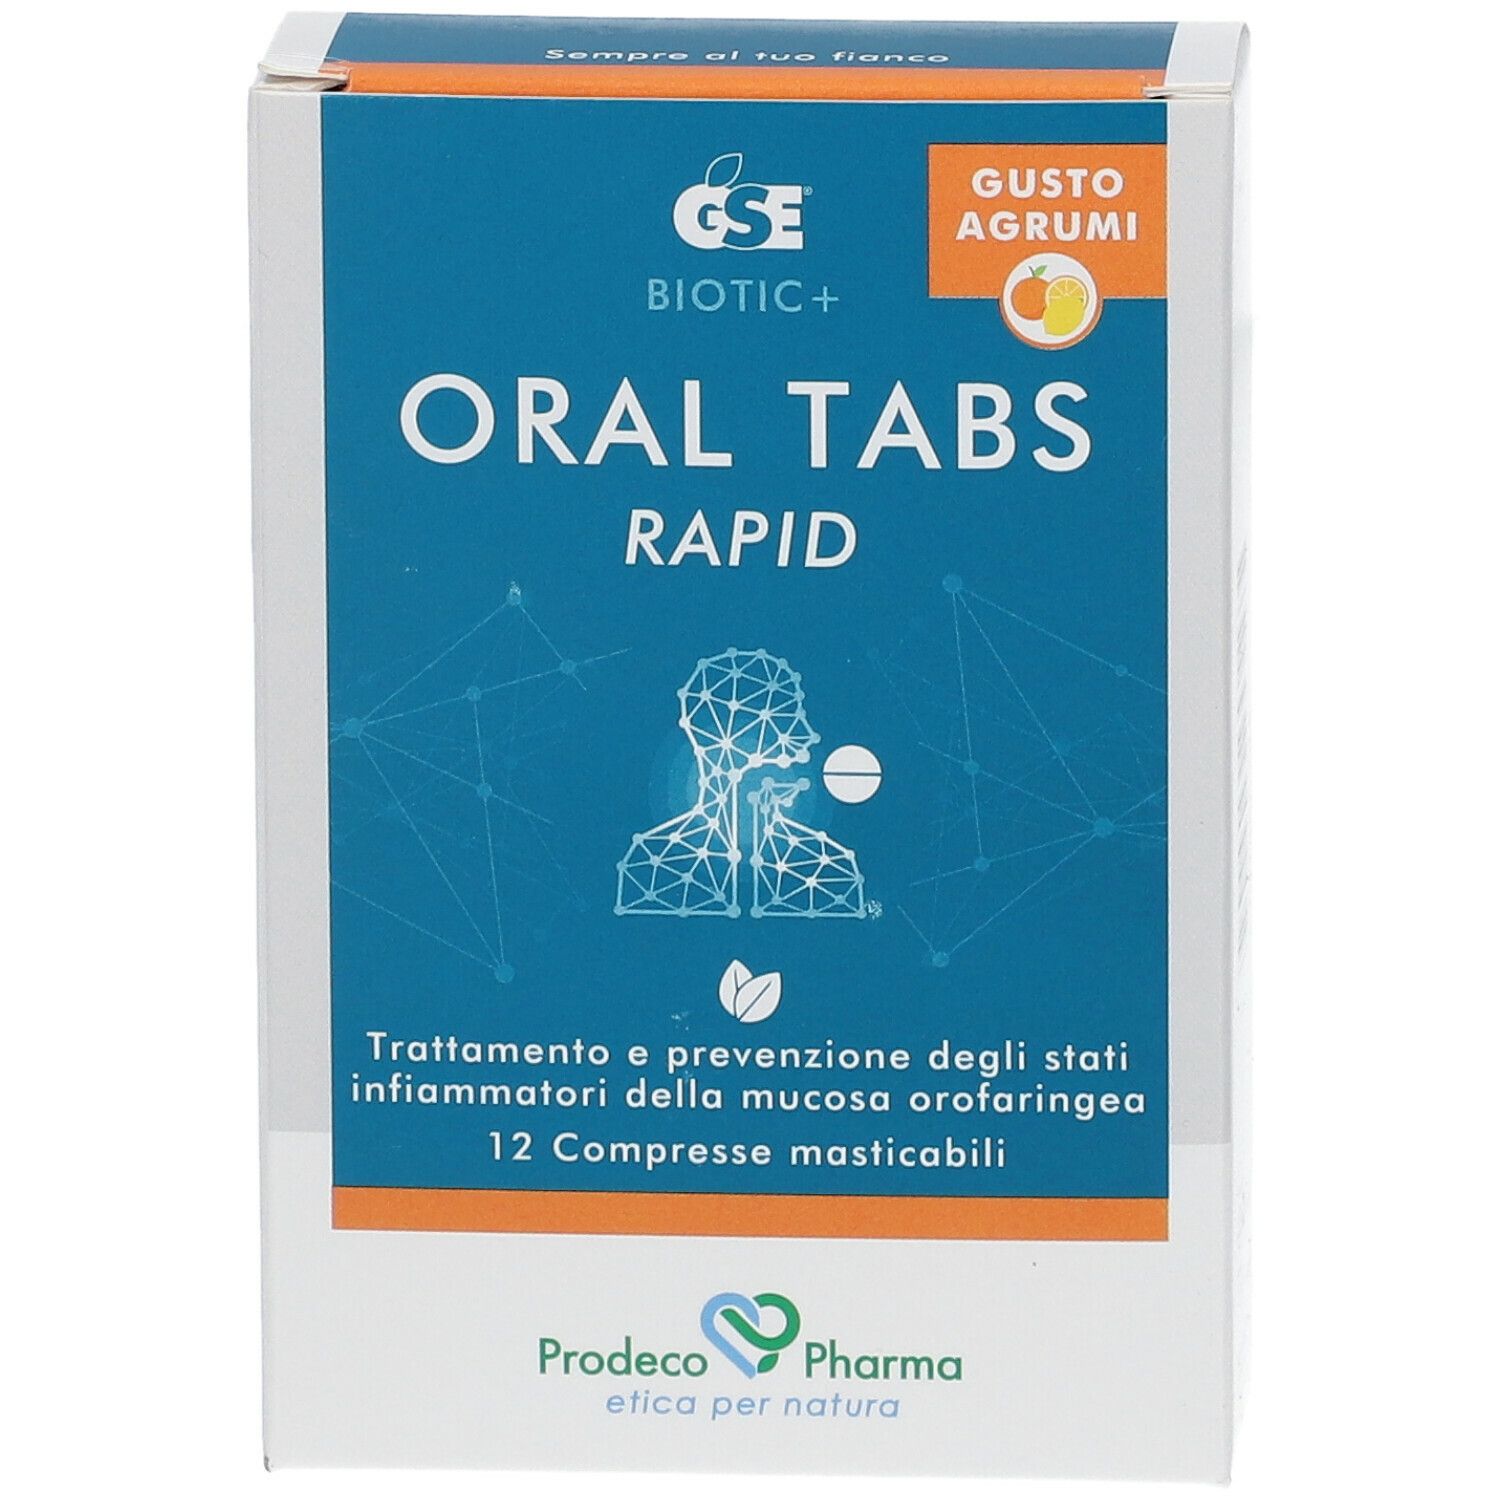 GSE® Oral Tabs Rapid